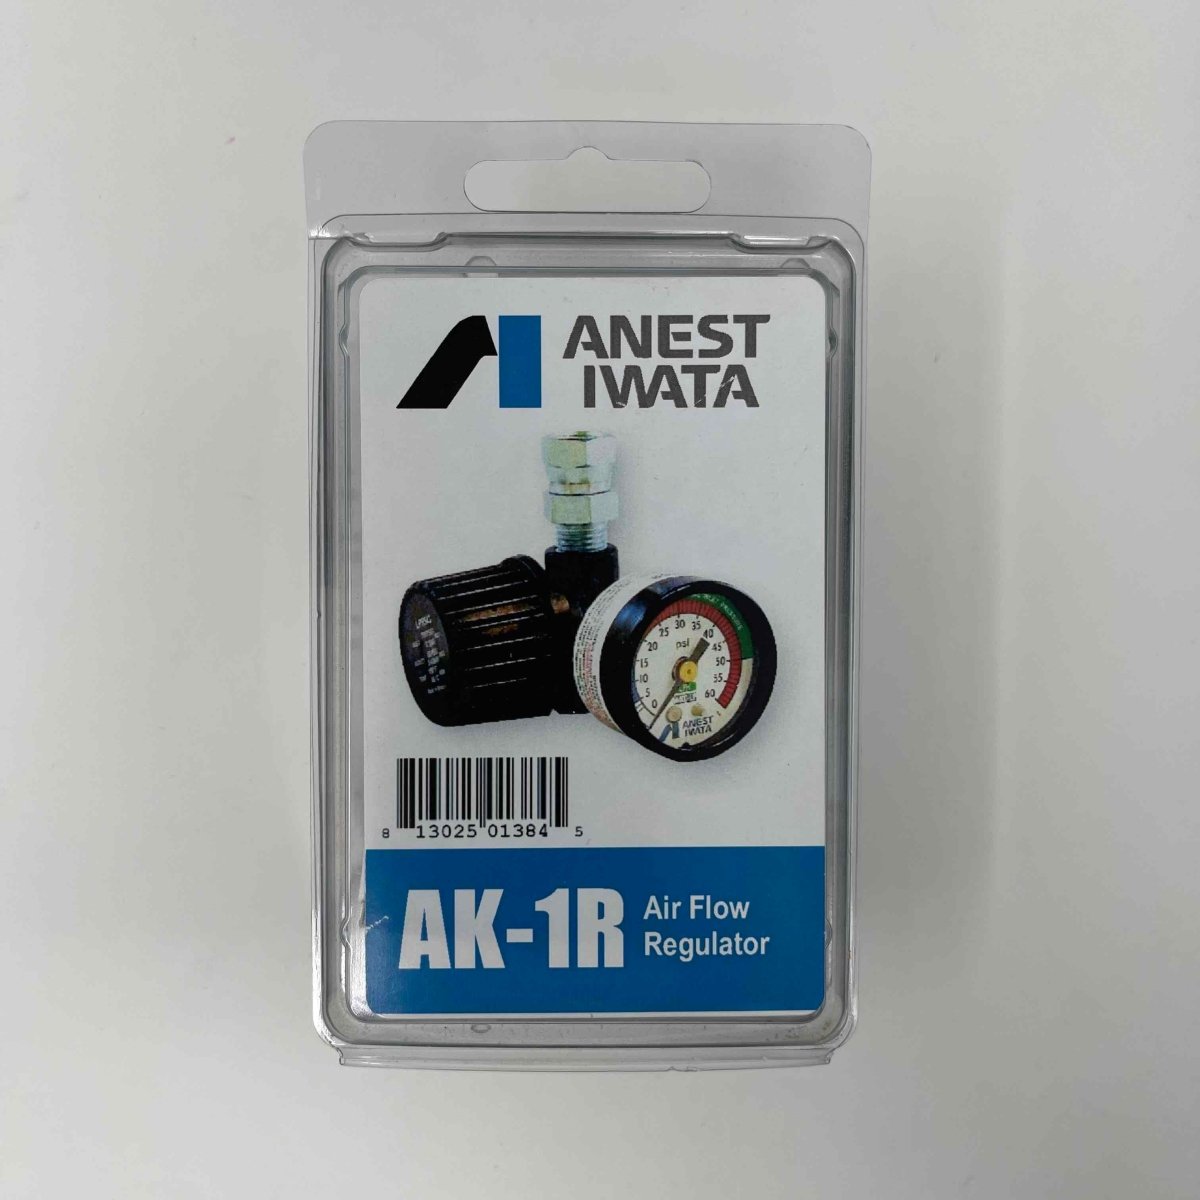 Bargain Basement - Anest Iwata AK-1R Air Flow Regulator - The Merri Artist - merriartist.com